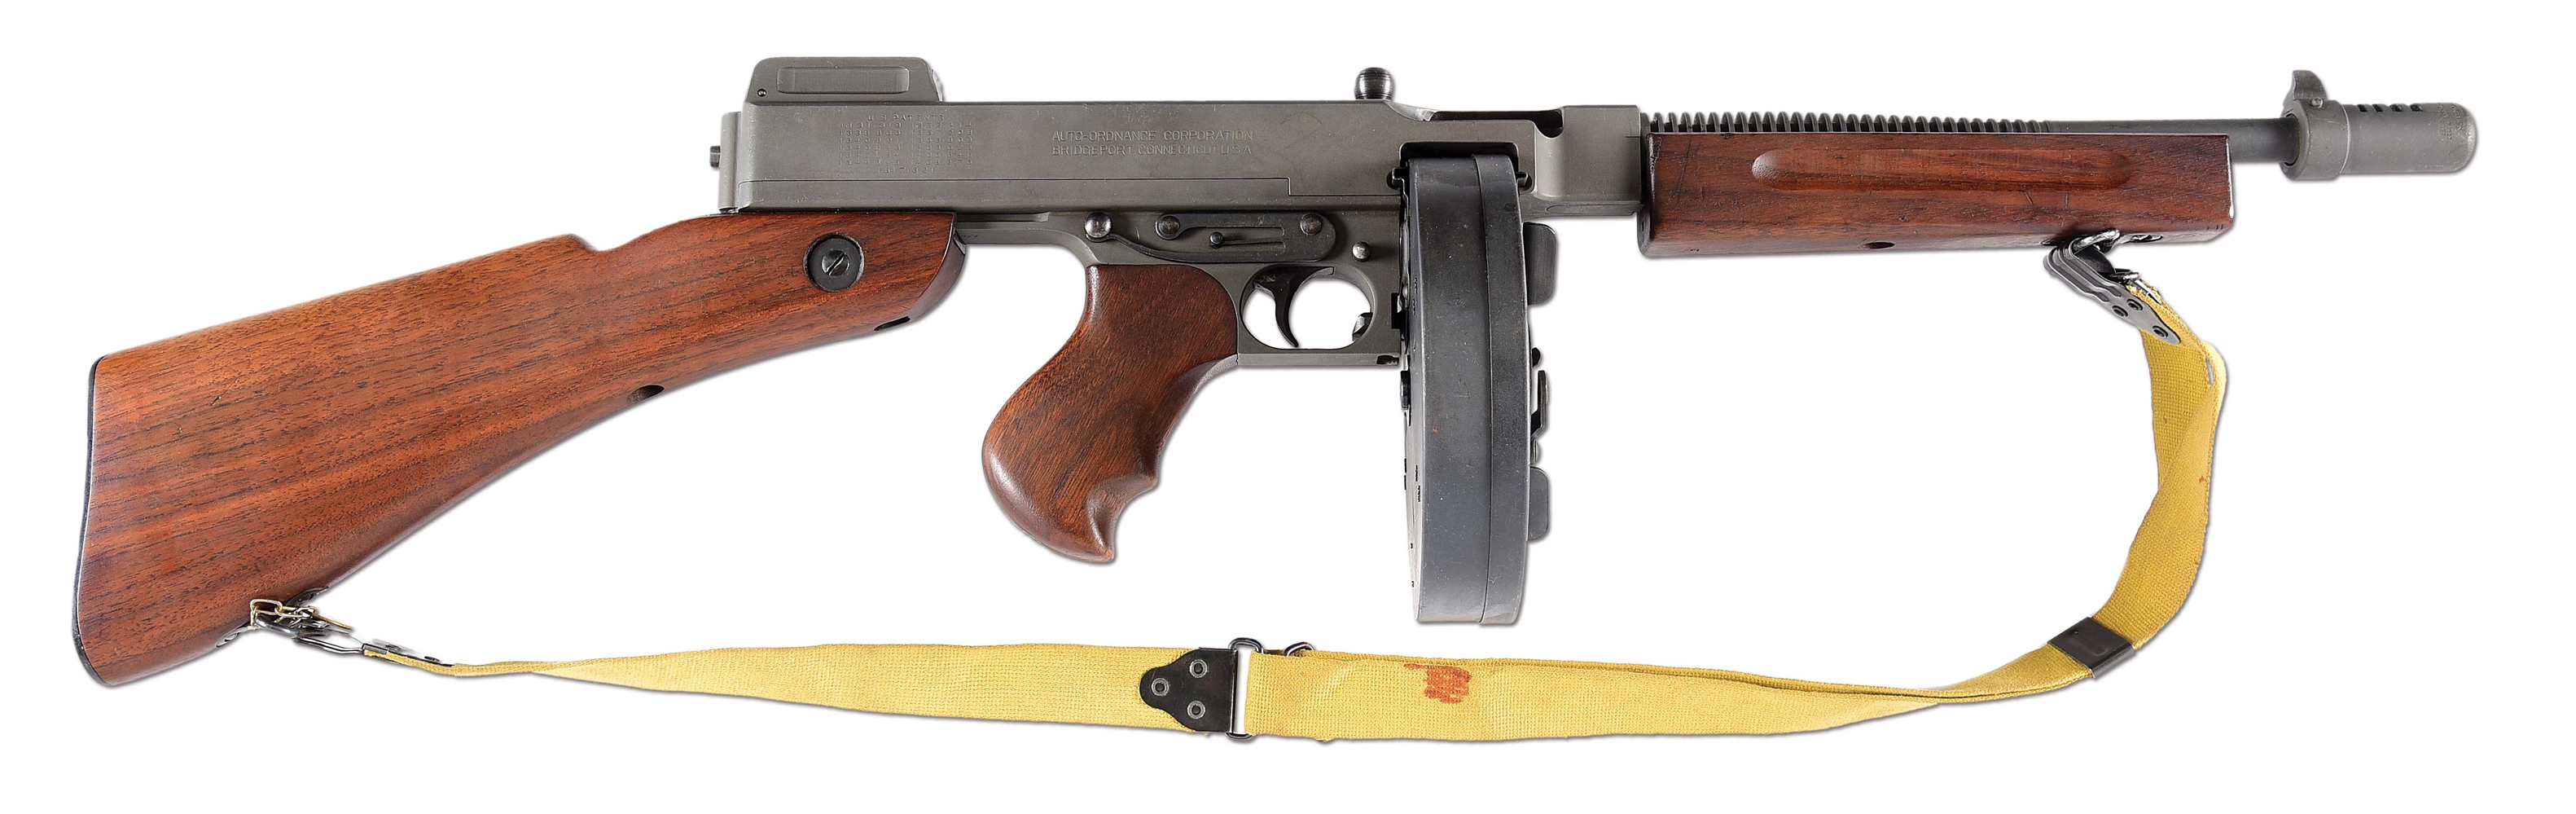 (N) AUTO ORDNANCE THOMPSON MODEL 1928A1 MACHINE GUN WITH ACCESSORIES (CURIO & RELIC).